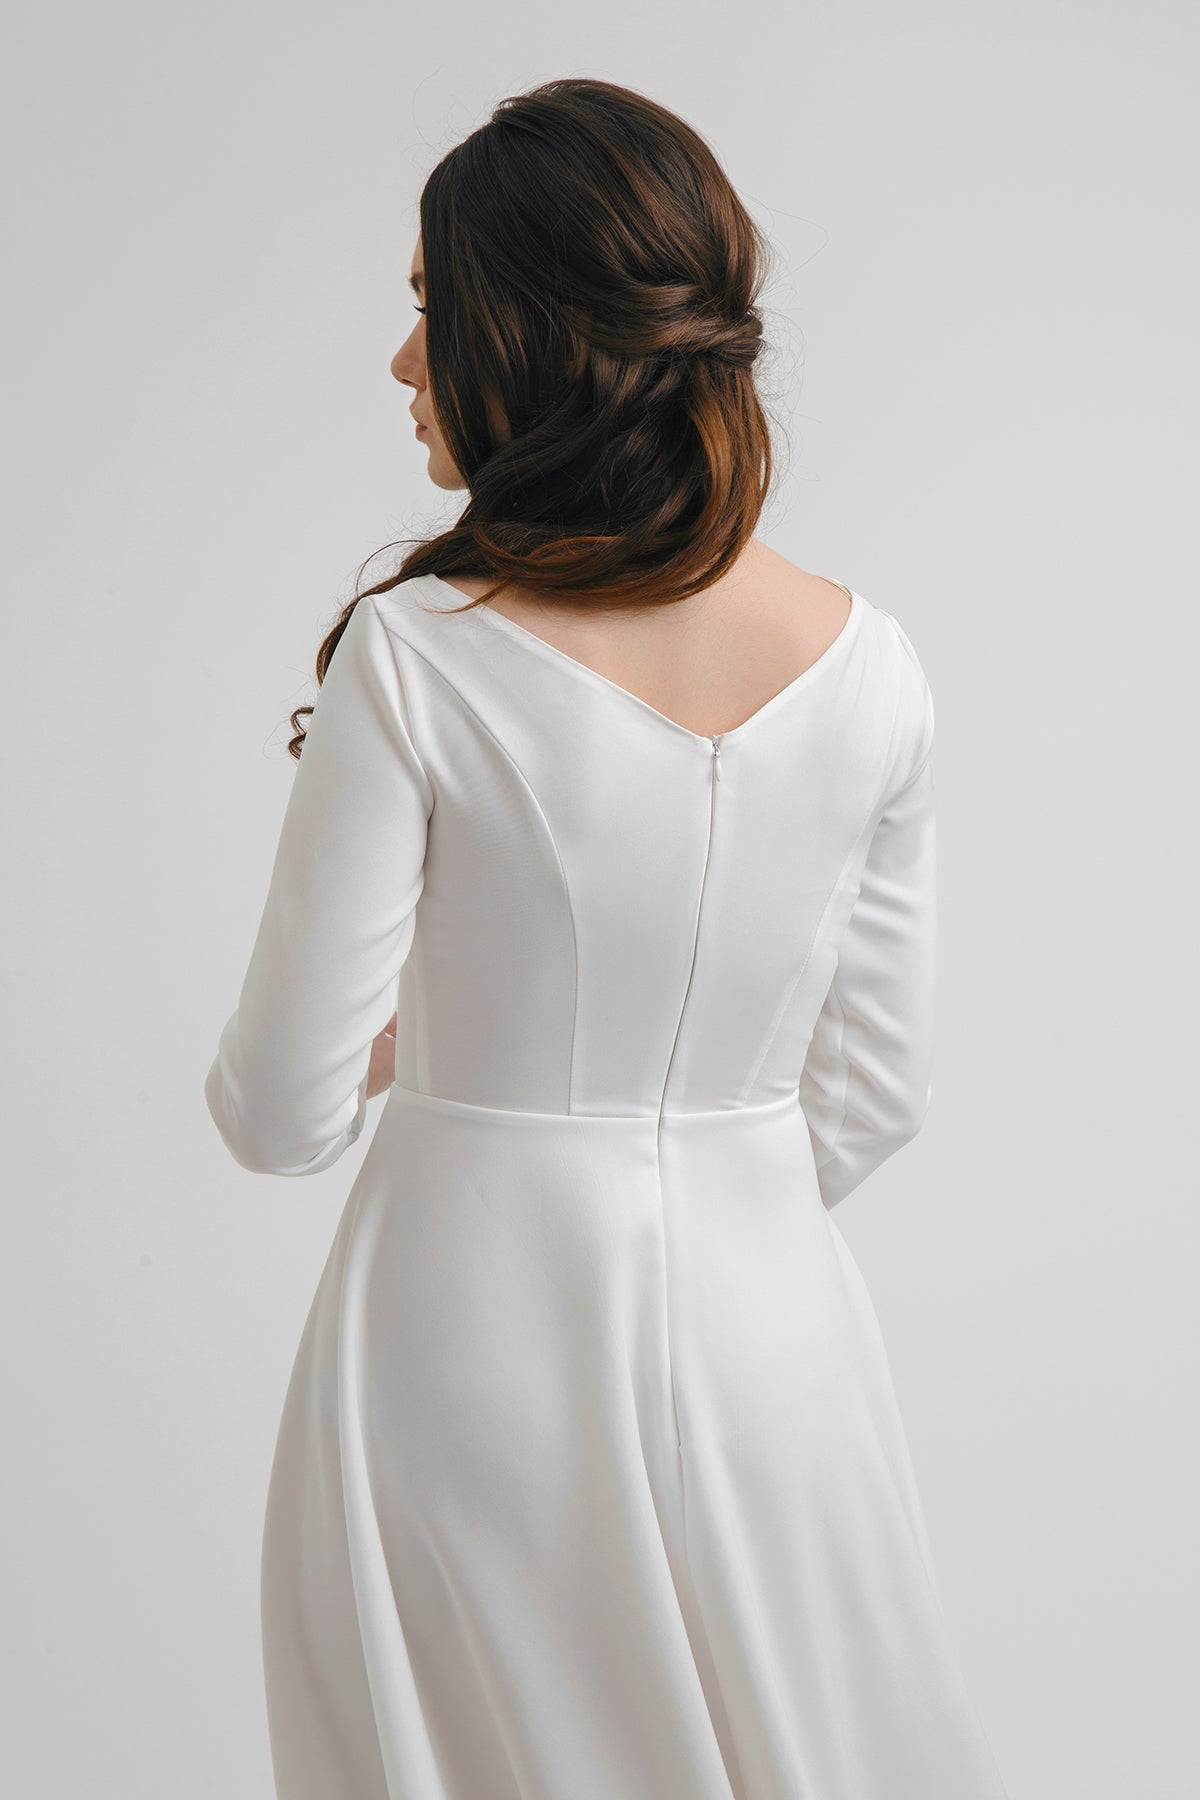 Tea lenght wedding dress • long sleeve wedding dress • short wedding dress • modest wedding dress • minimalist dress